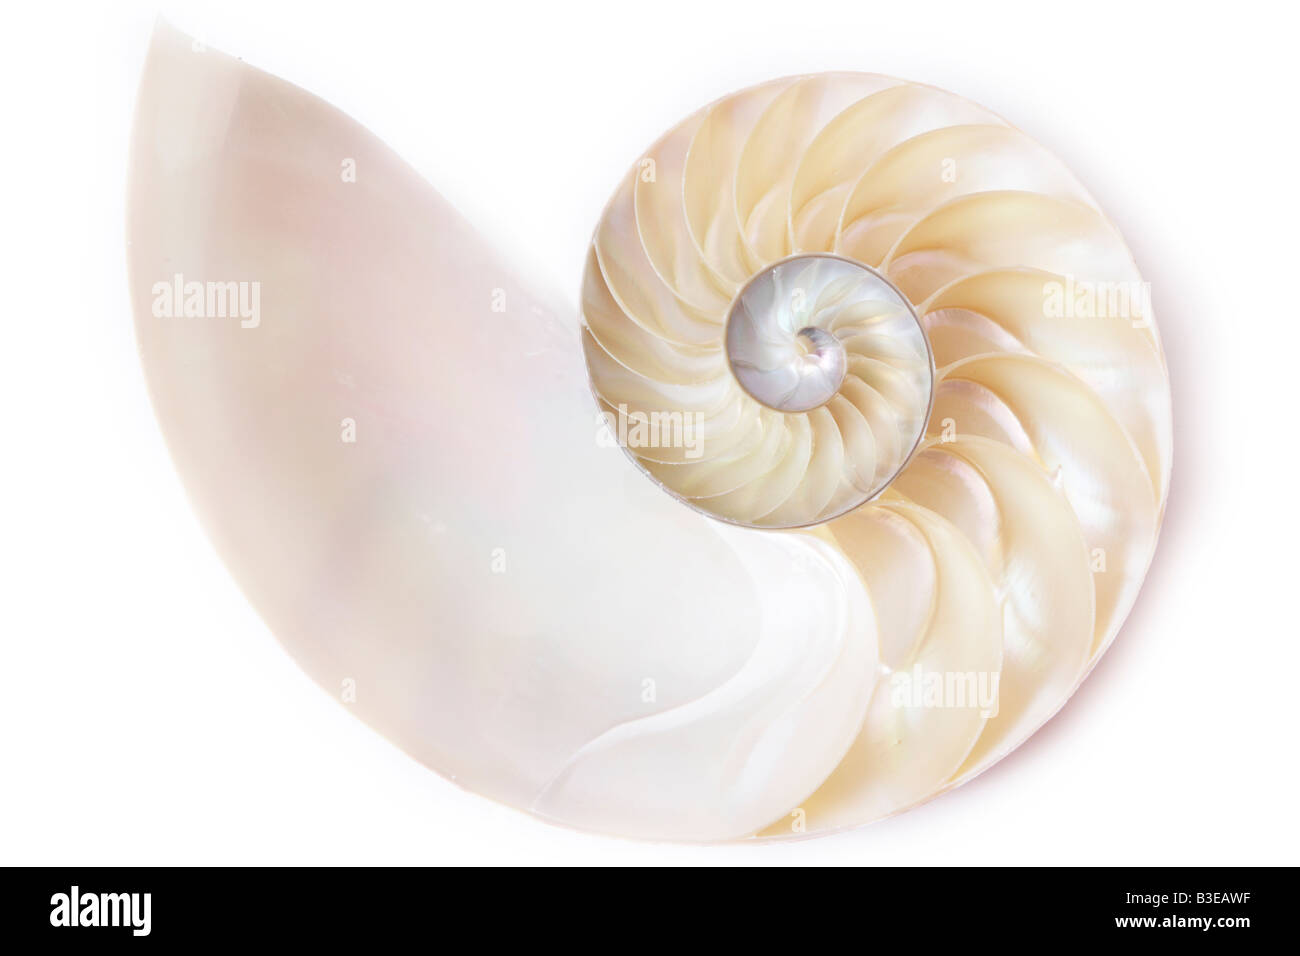 https://c8.alamy.com/comp/B3EAWF/stock-photo-of-the-inside-of-a-spiral-seashell-B3EAWF.jpg